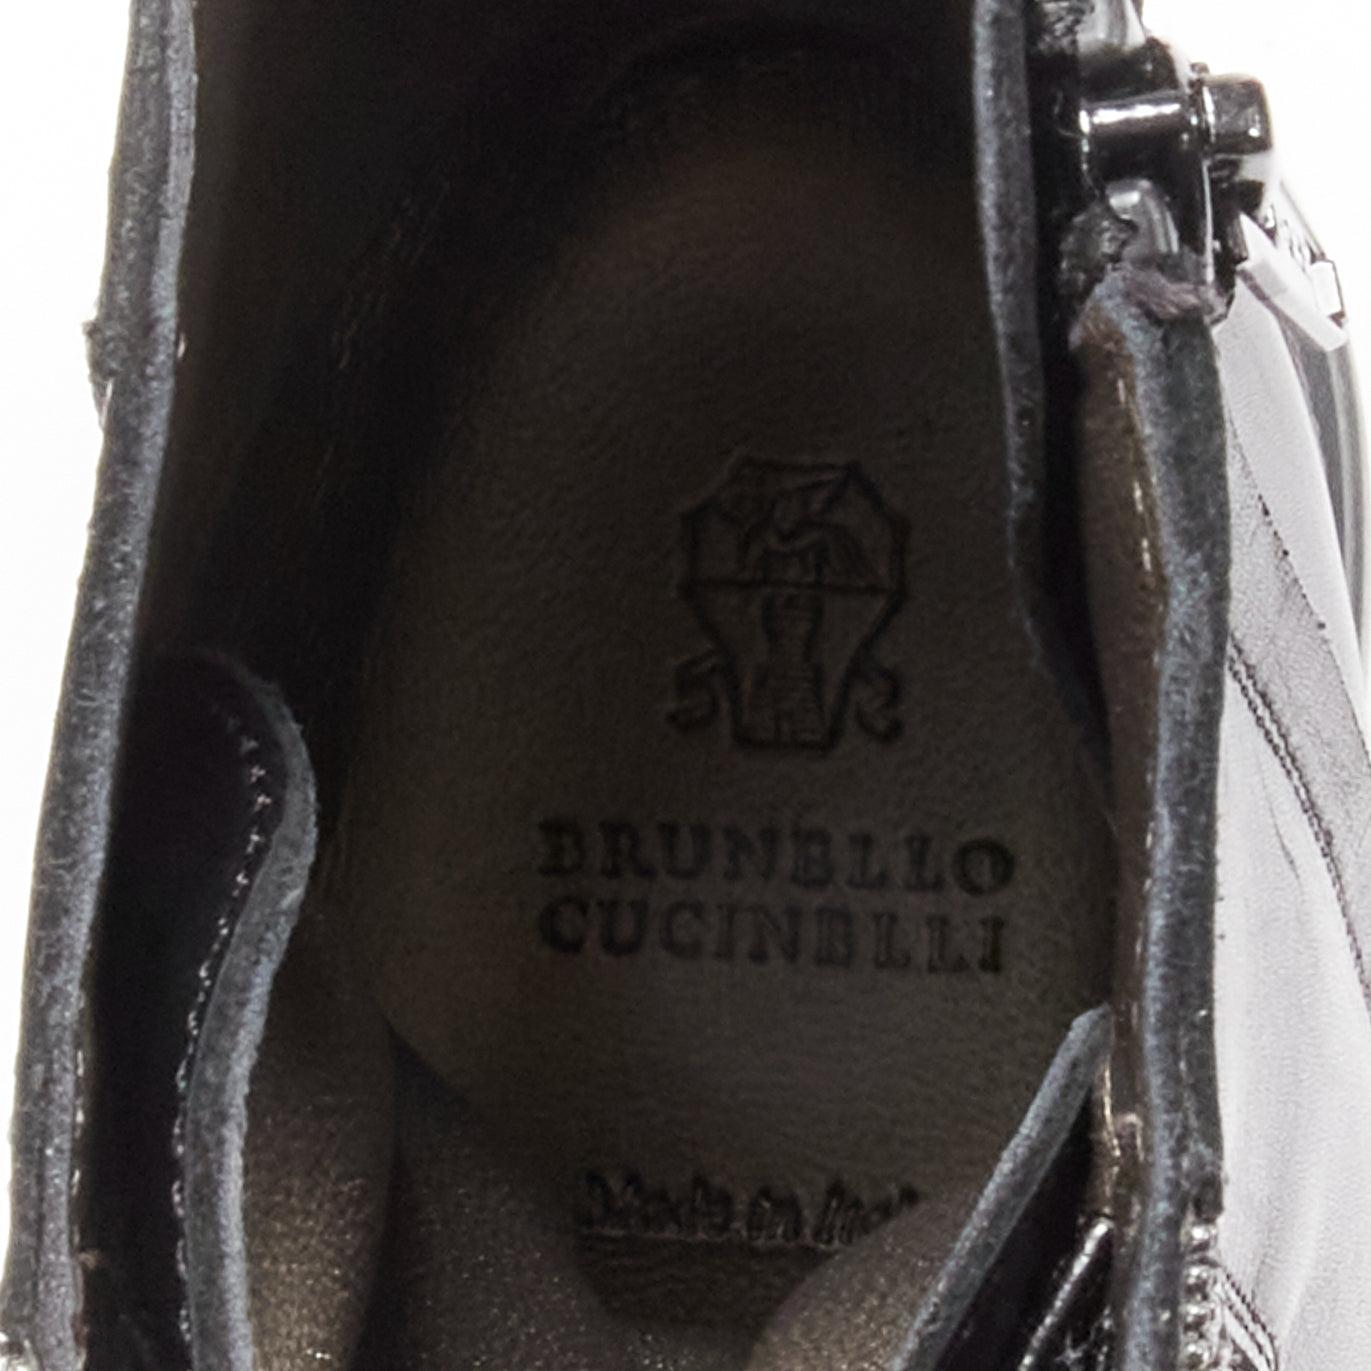 BRUNELLO CUCINELLI Monili black leather bead embellished side zip boots EU38 5